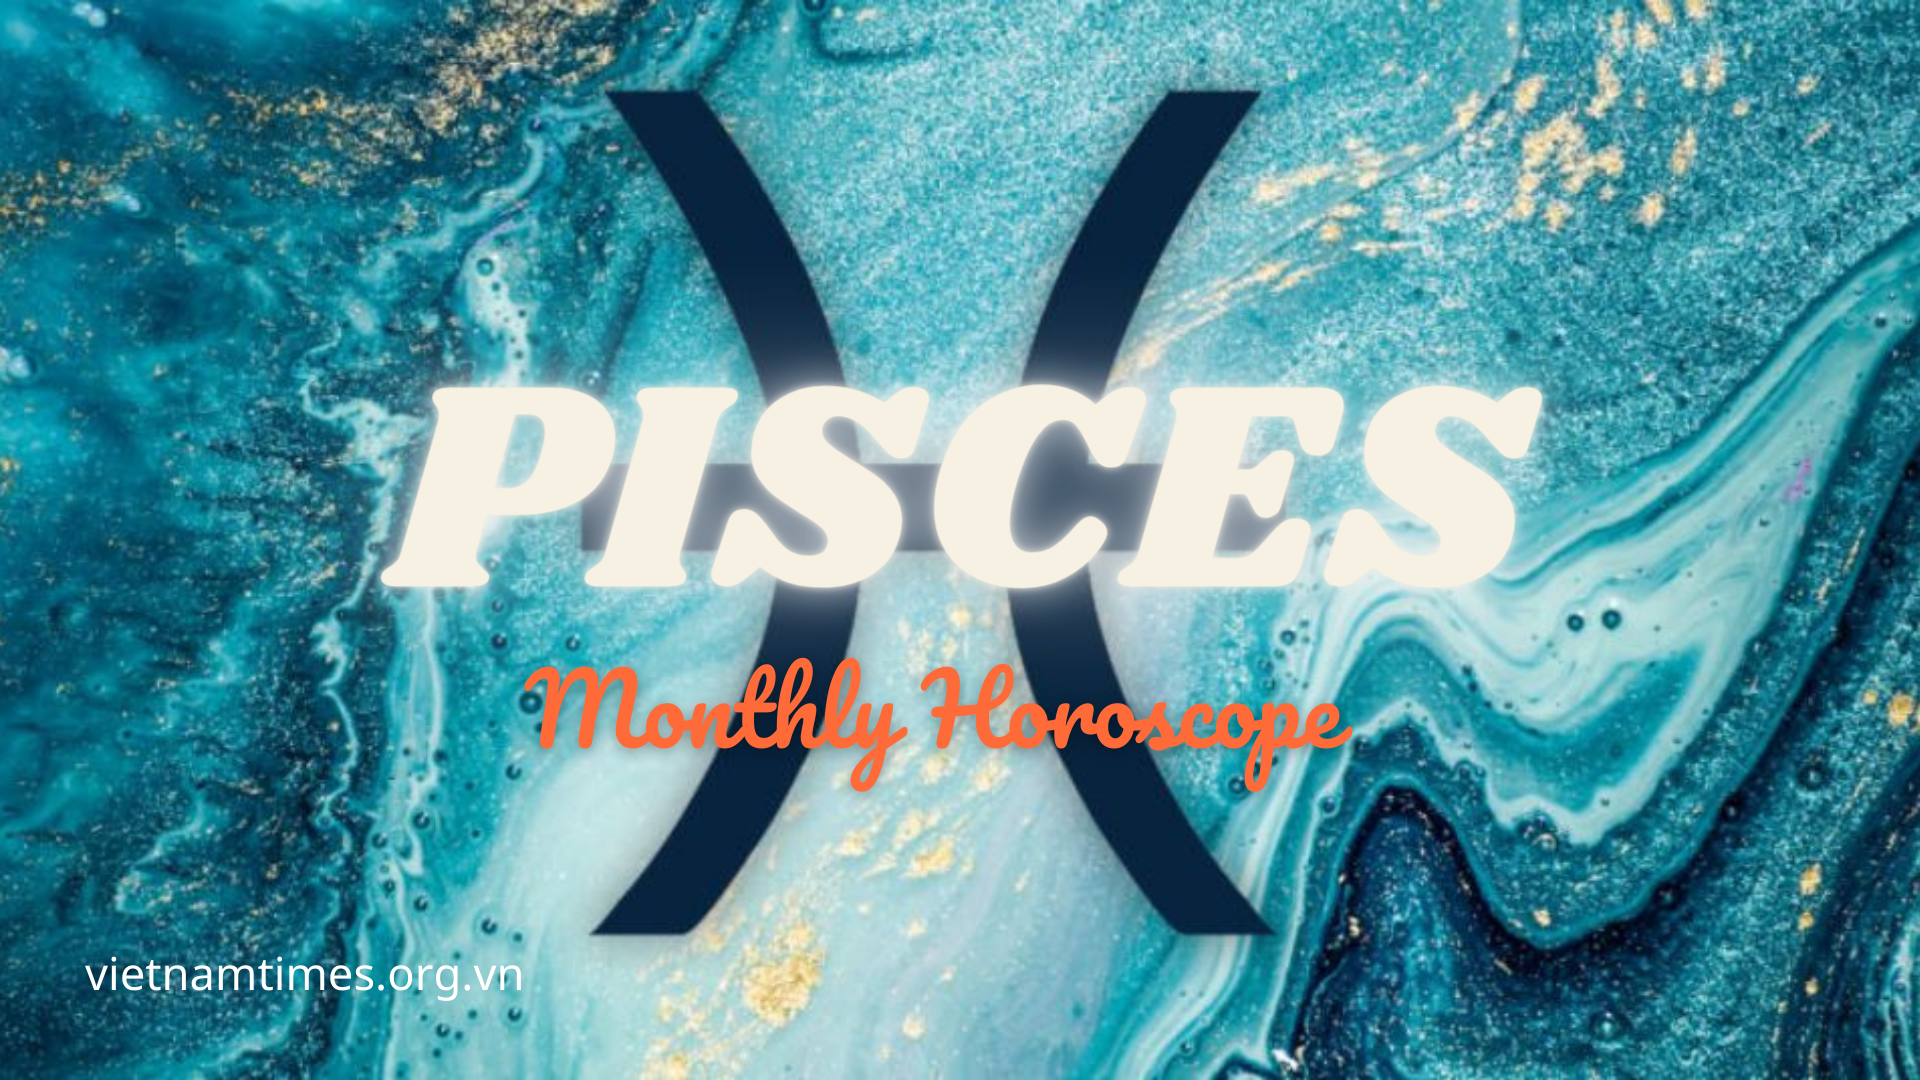 Pisces Monthly Horoscope, November 2021. Photo: vietnamtimes.